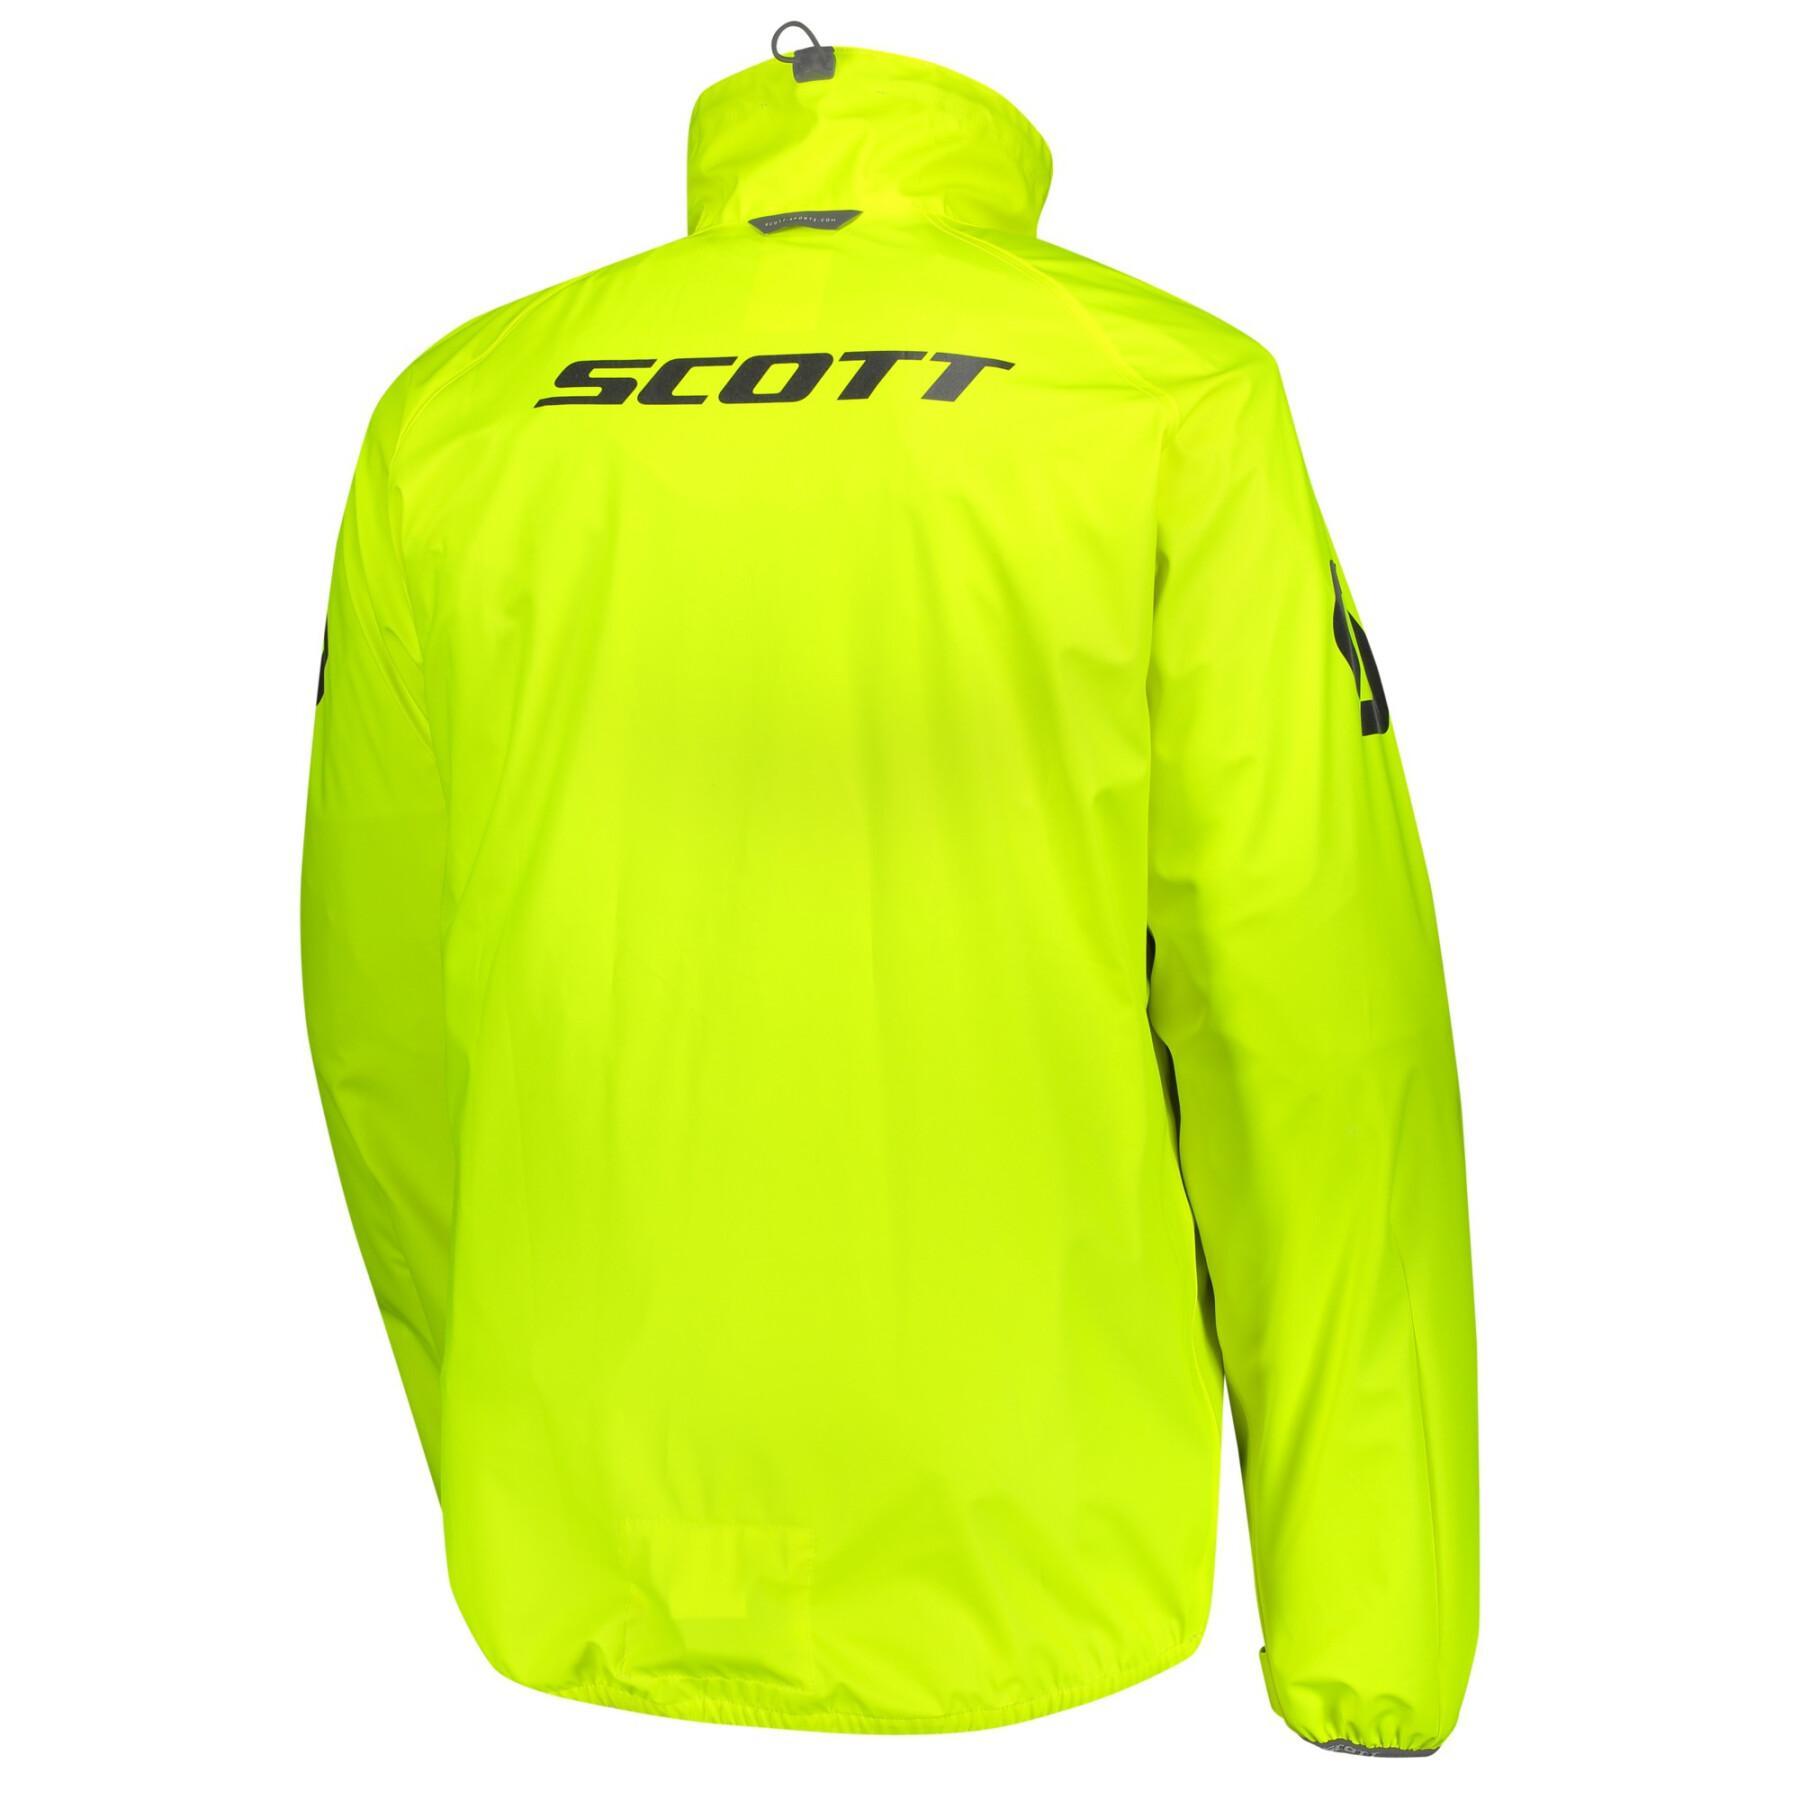 Rain jacket Scott ergonomic pro DP